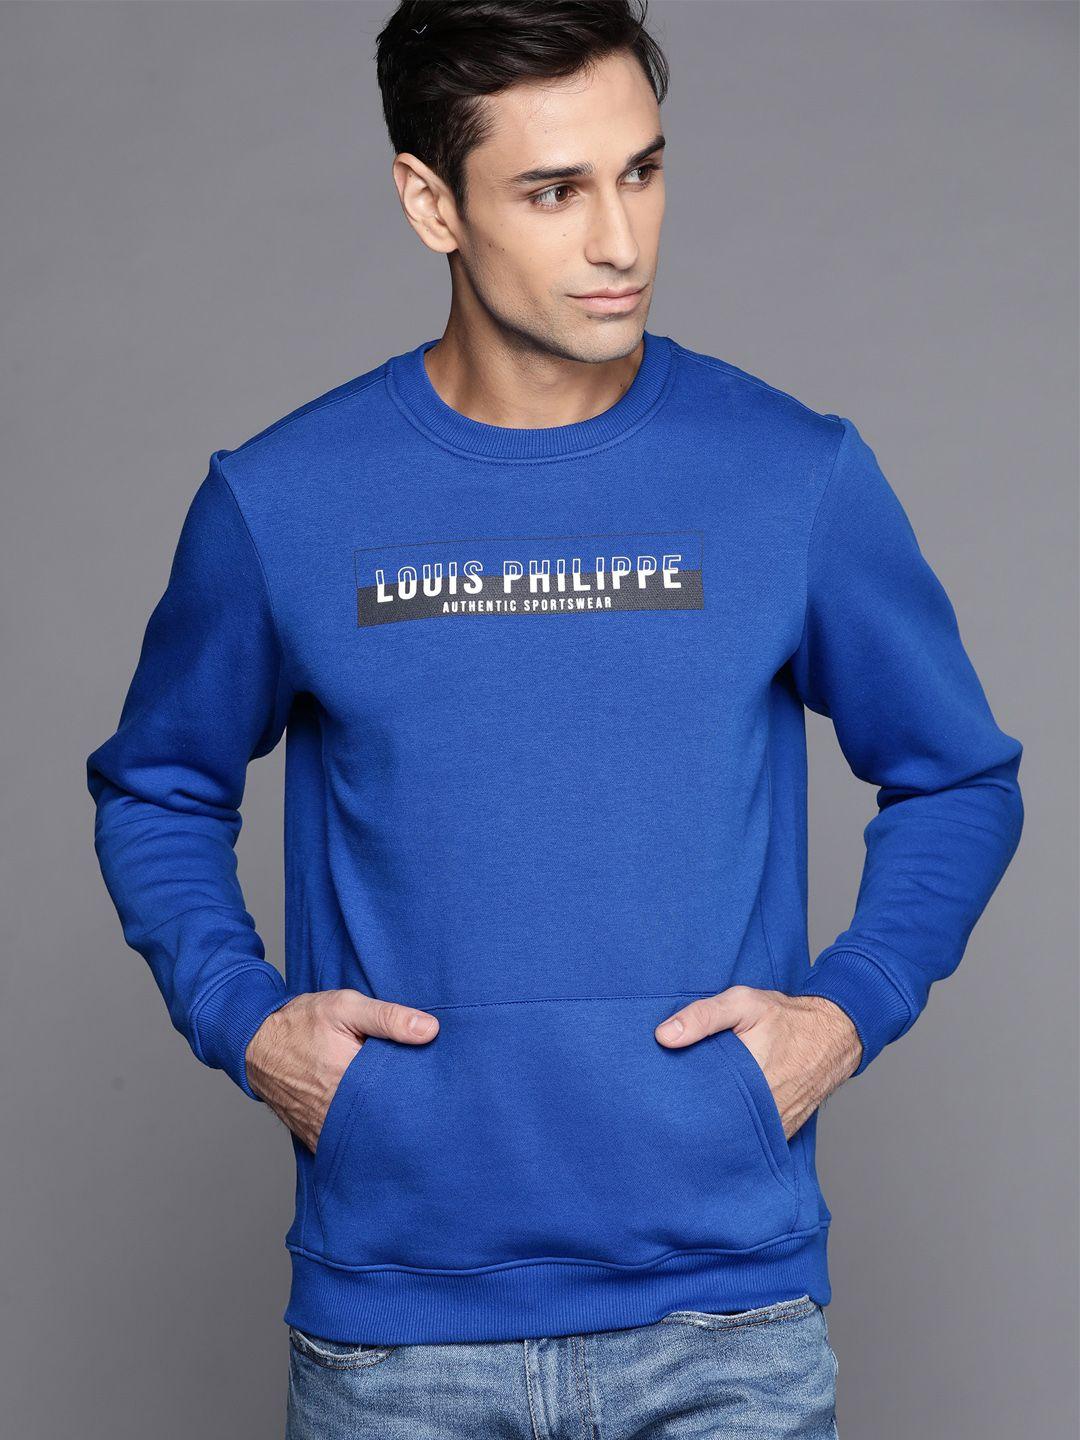 louis-philippe-sport-men-blue-&-black-brand-logo-printed-sweatshirt